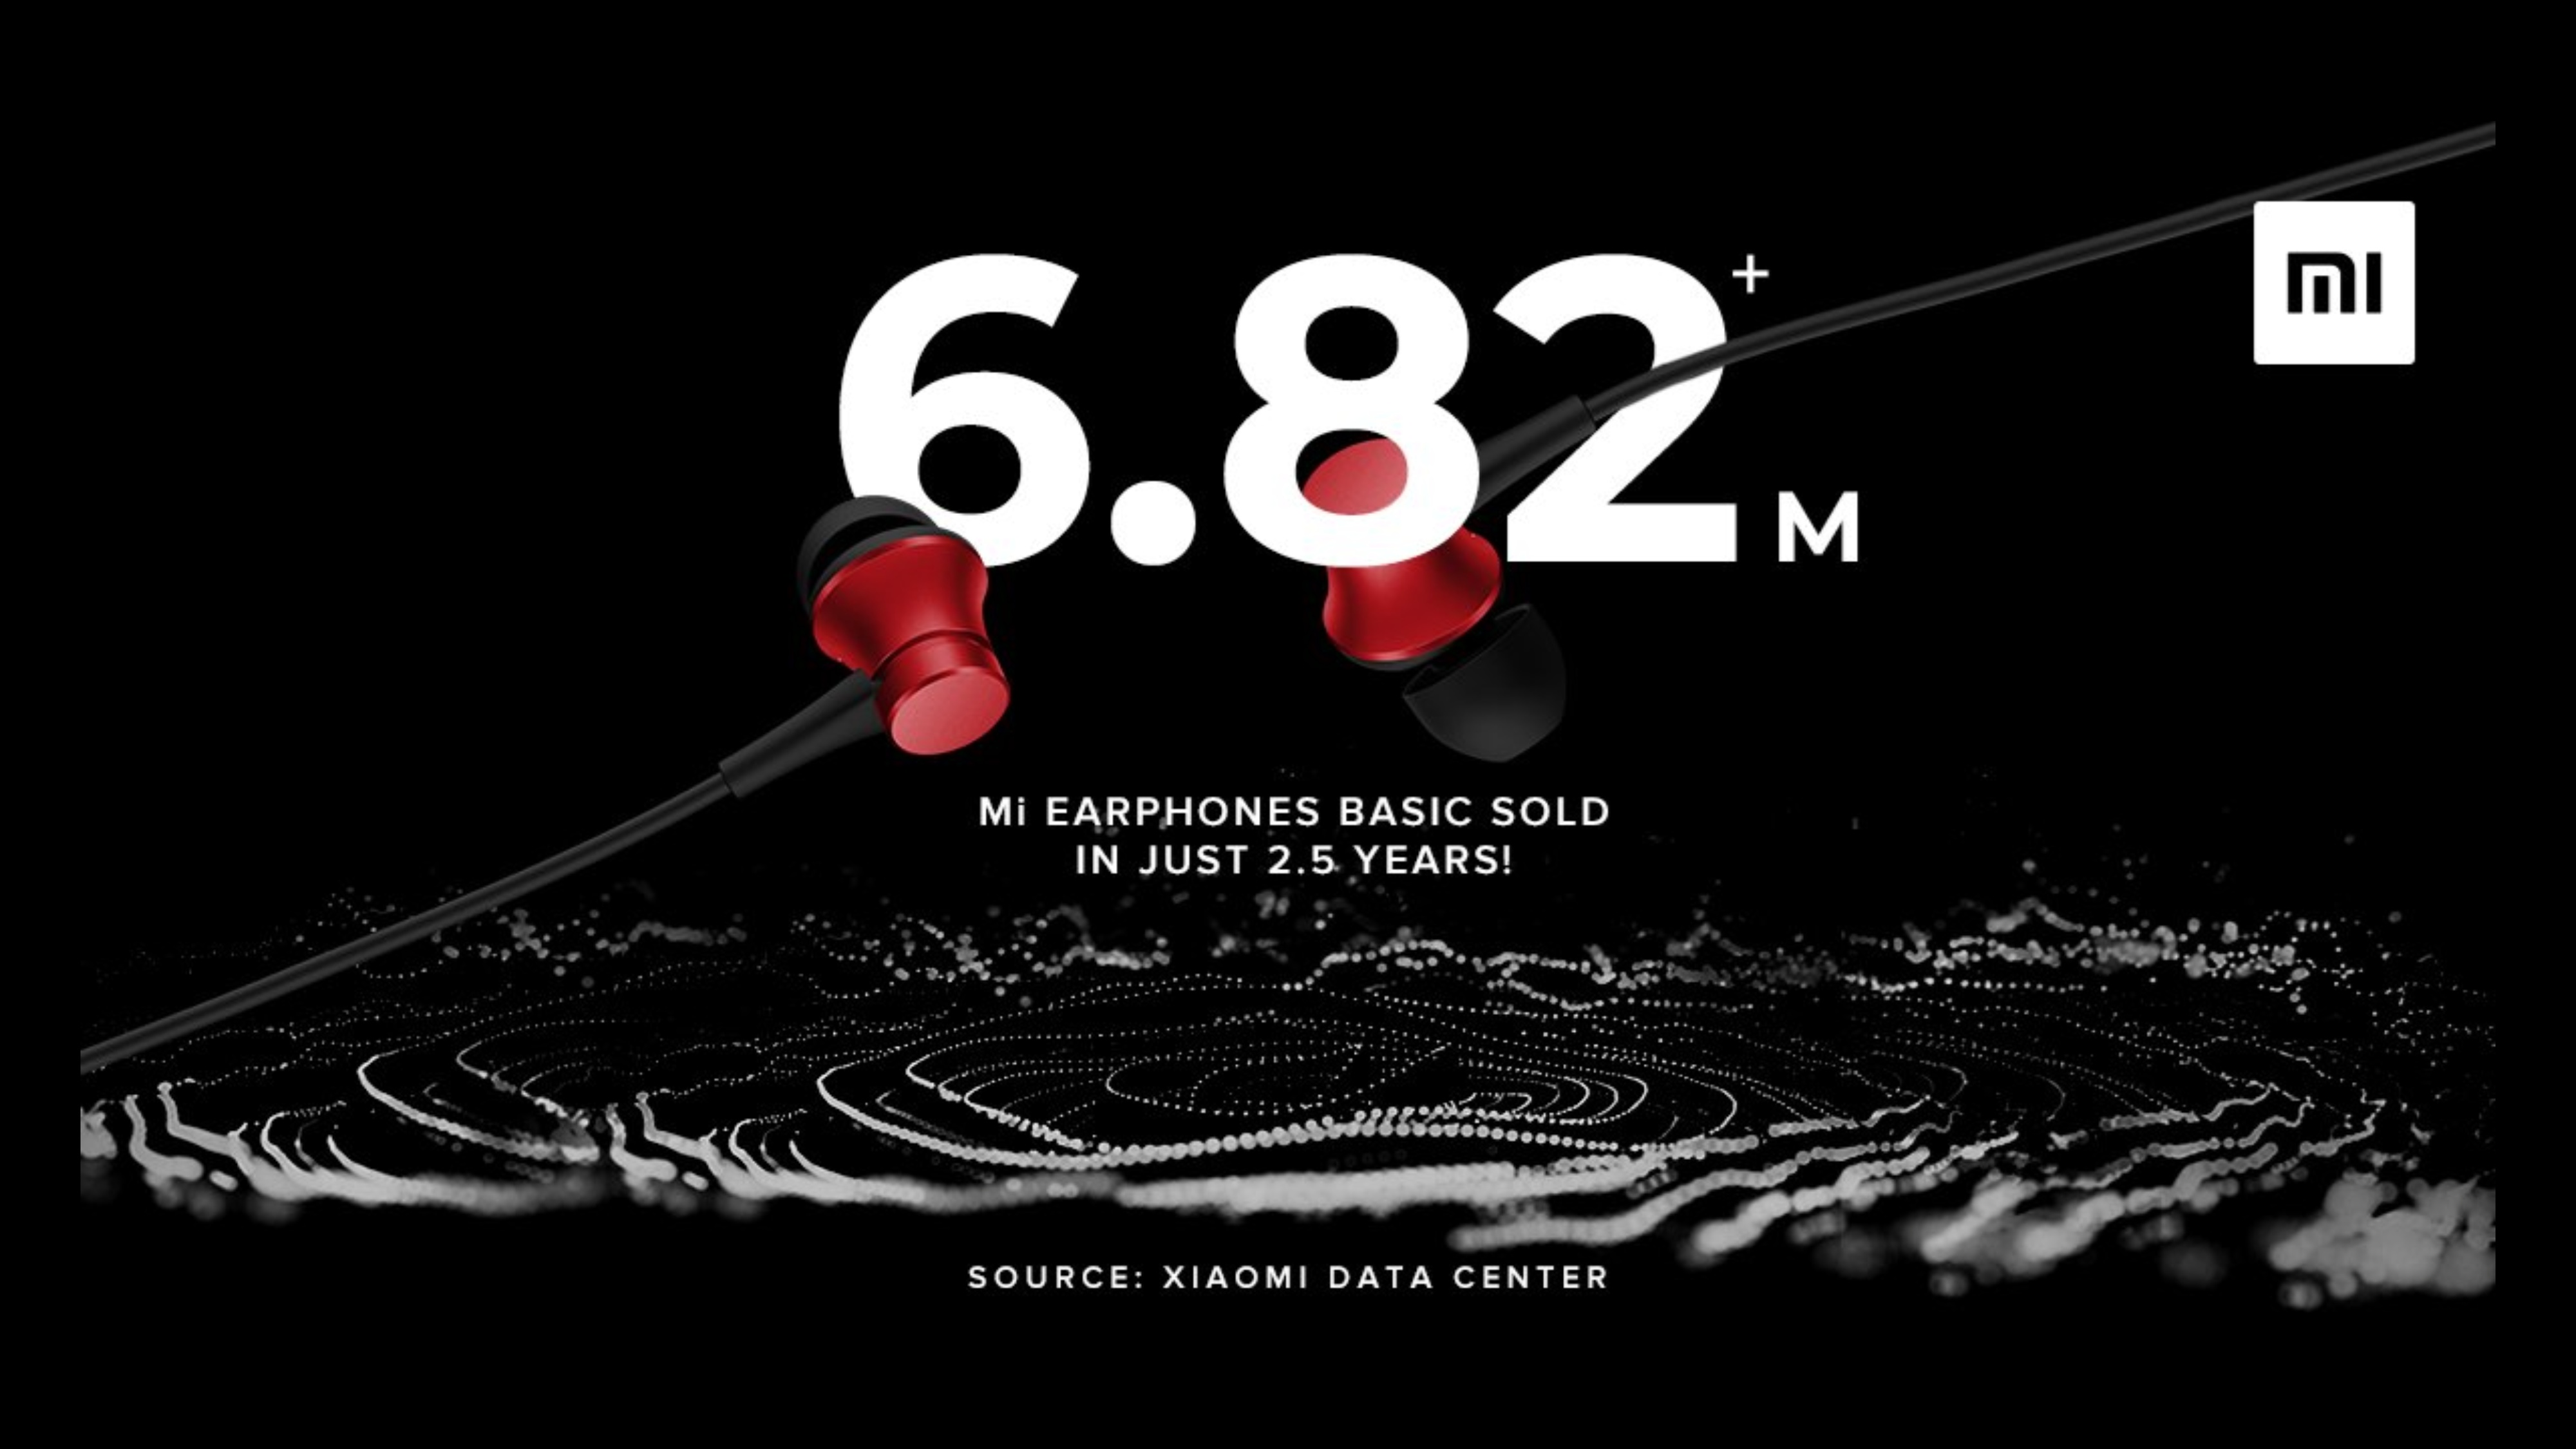 Xiaomi Mi Earphones Basic Over 6.82 Million Units Sold In 2.5 Years